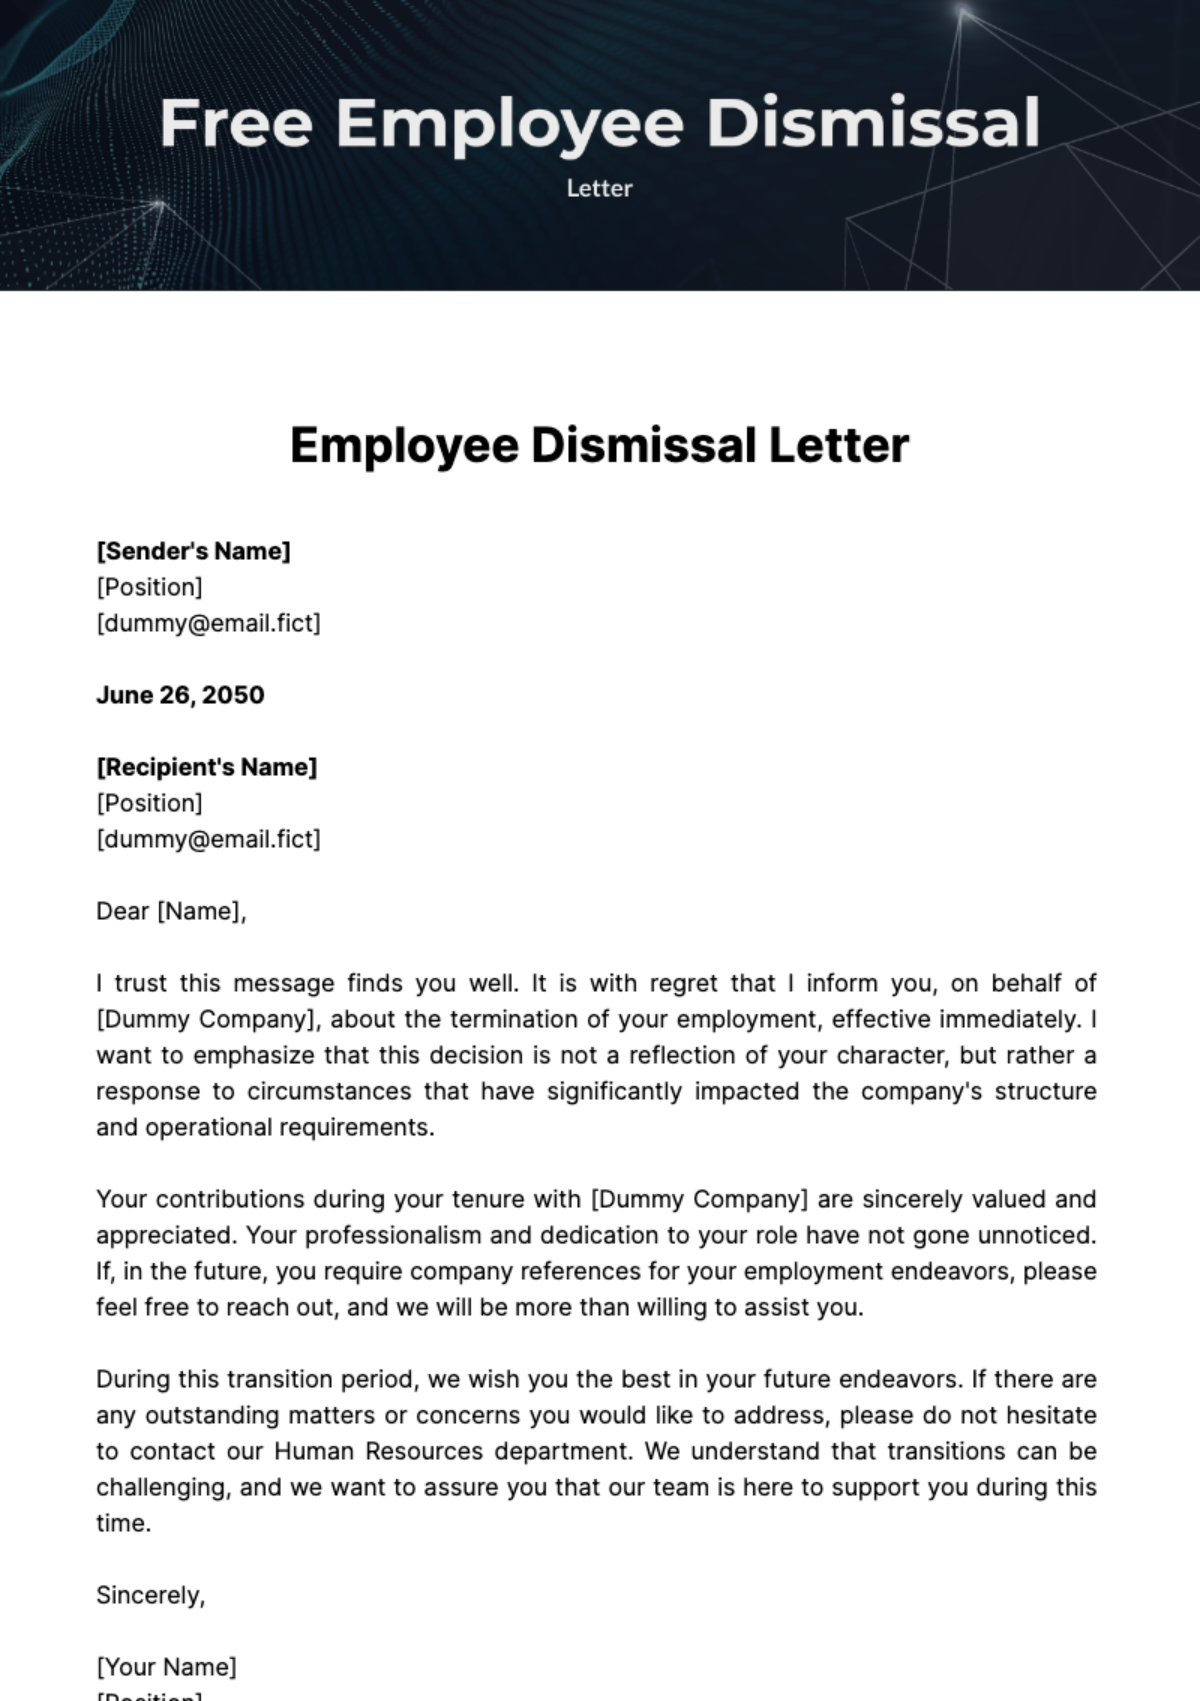 Free Employee Dismissal Letter Template